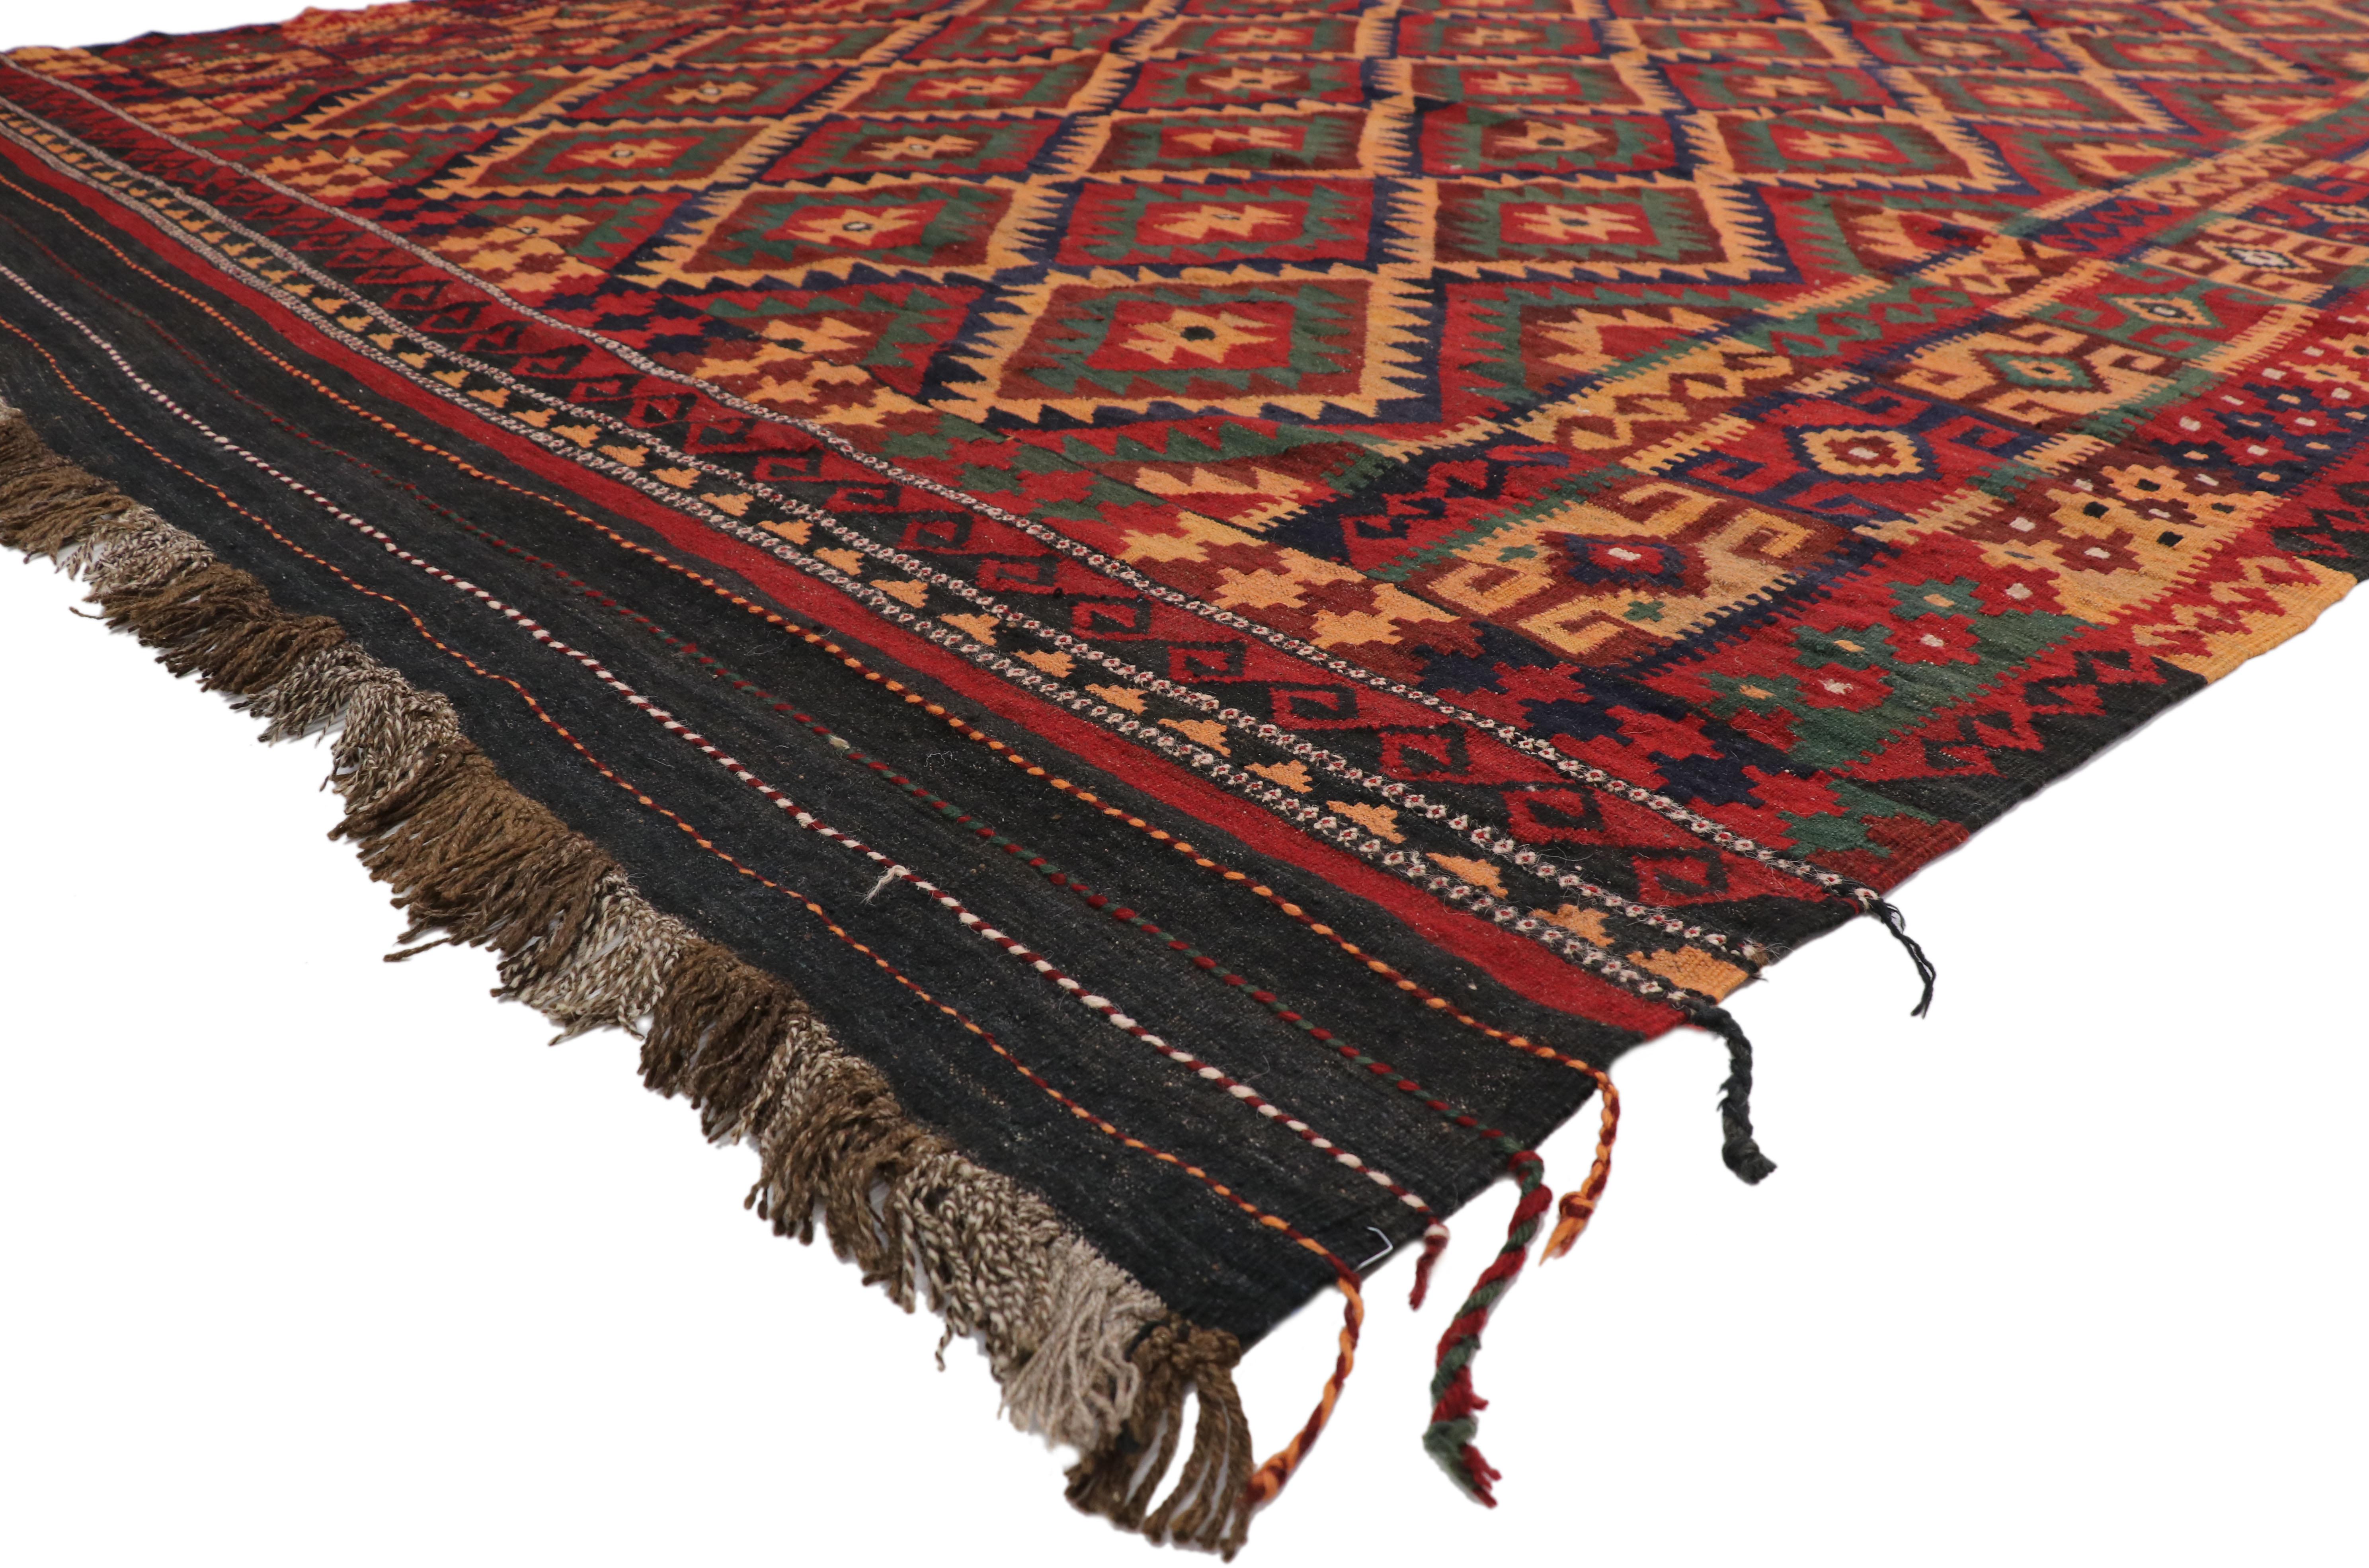 74279, vintage Afghan Ghalmouri Maimana Kilim rug with Nomadic Tribal style. 74279 vintage Afghan Ghalmouri Maimana Kilim rug with nomadic Tribal style. Highlighting nomadic charm and nomadic tribal vibes, this handwoven wool vintage Afghan